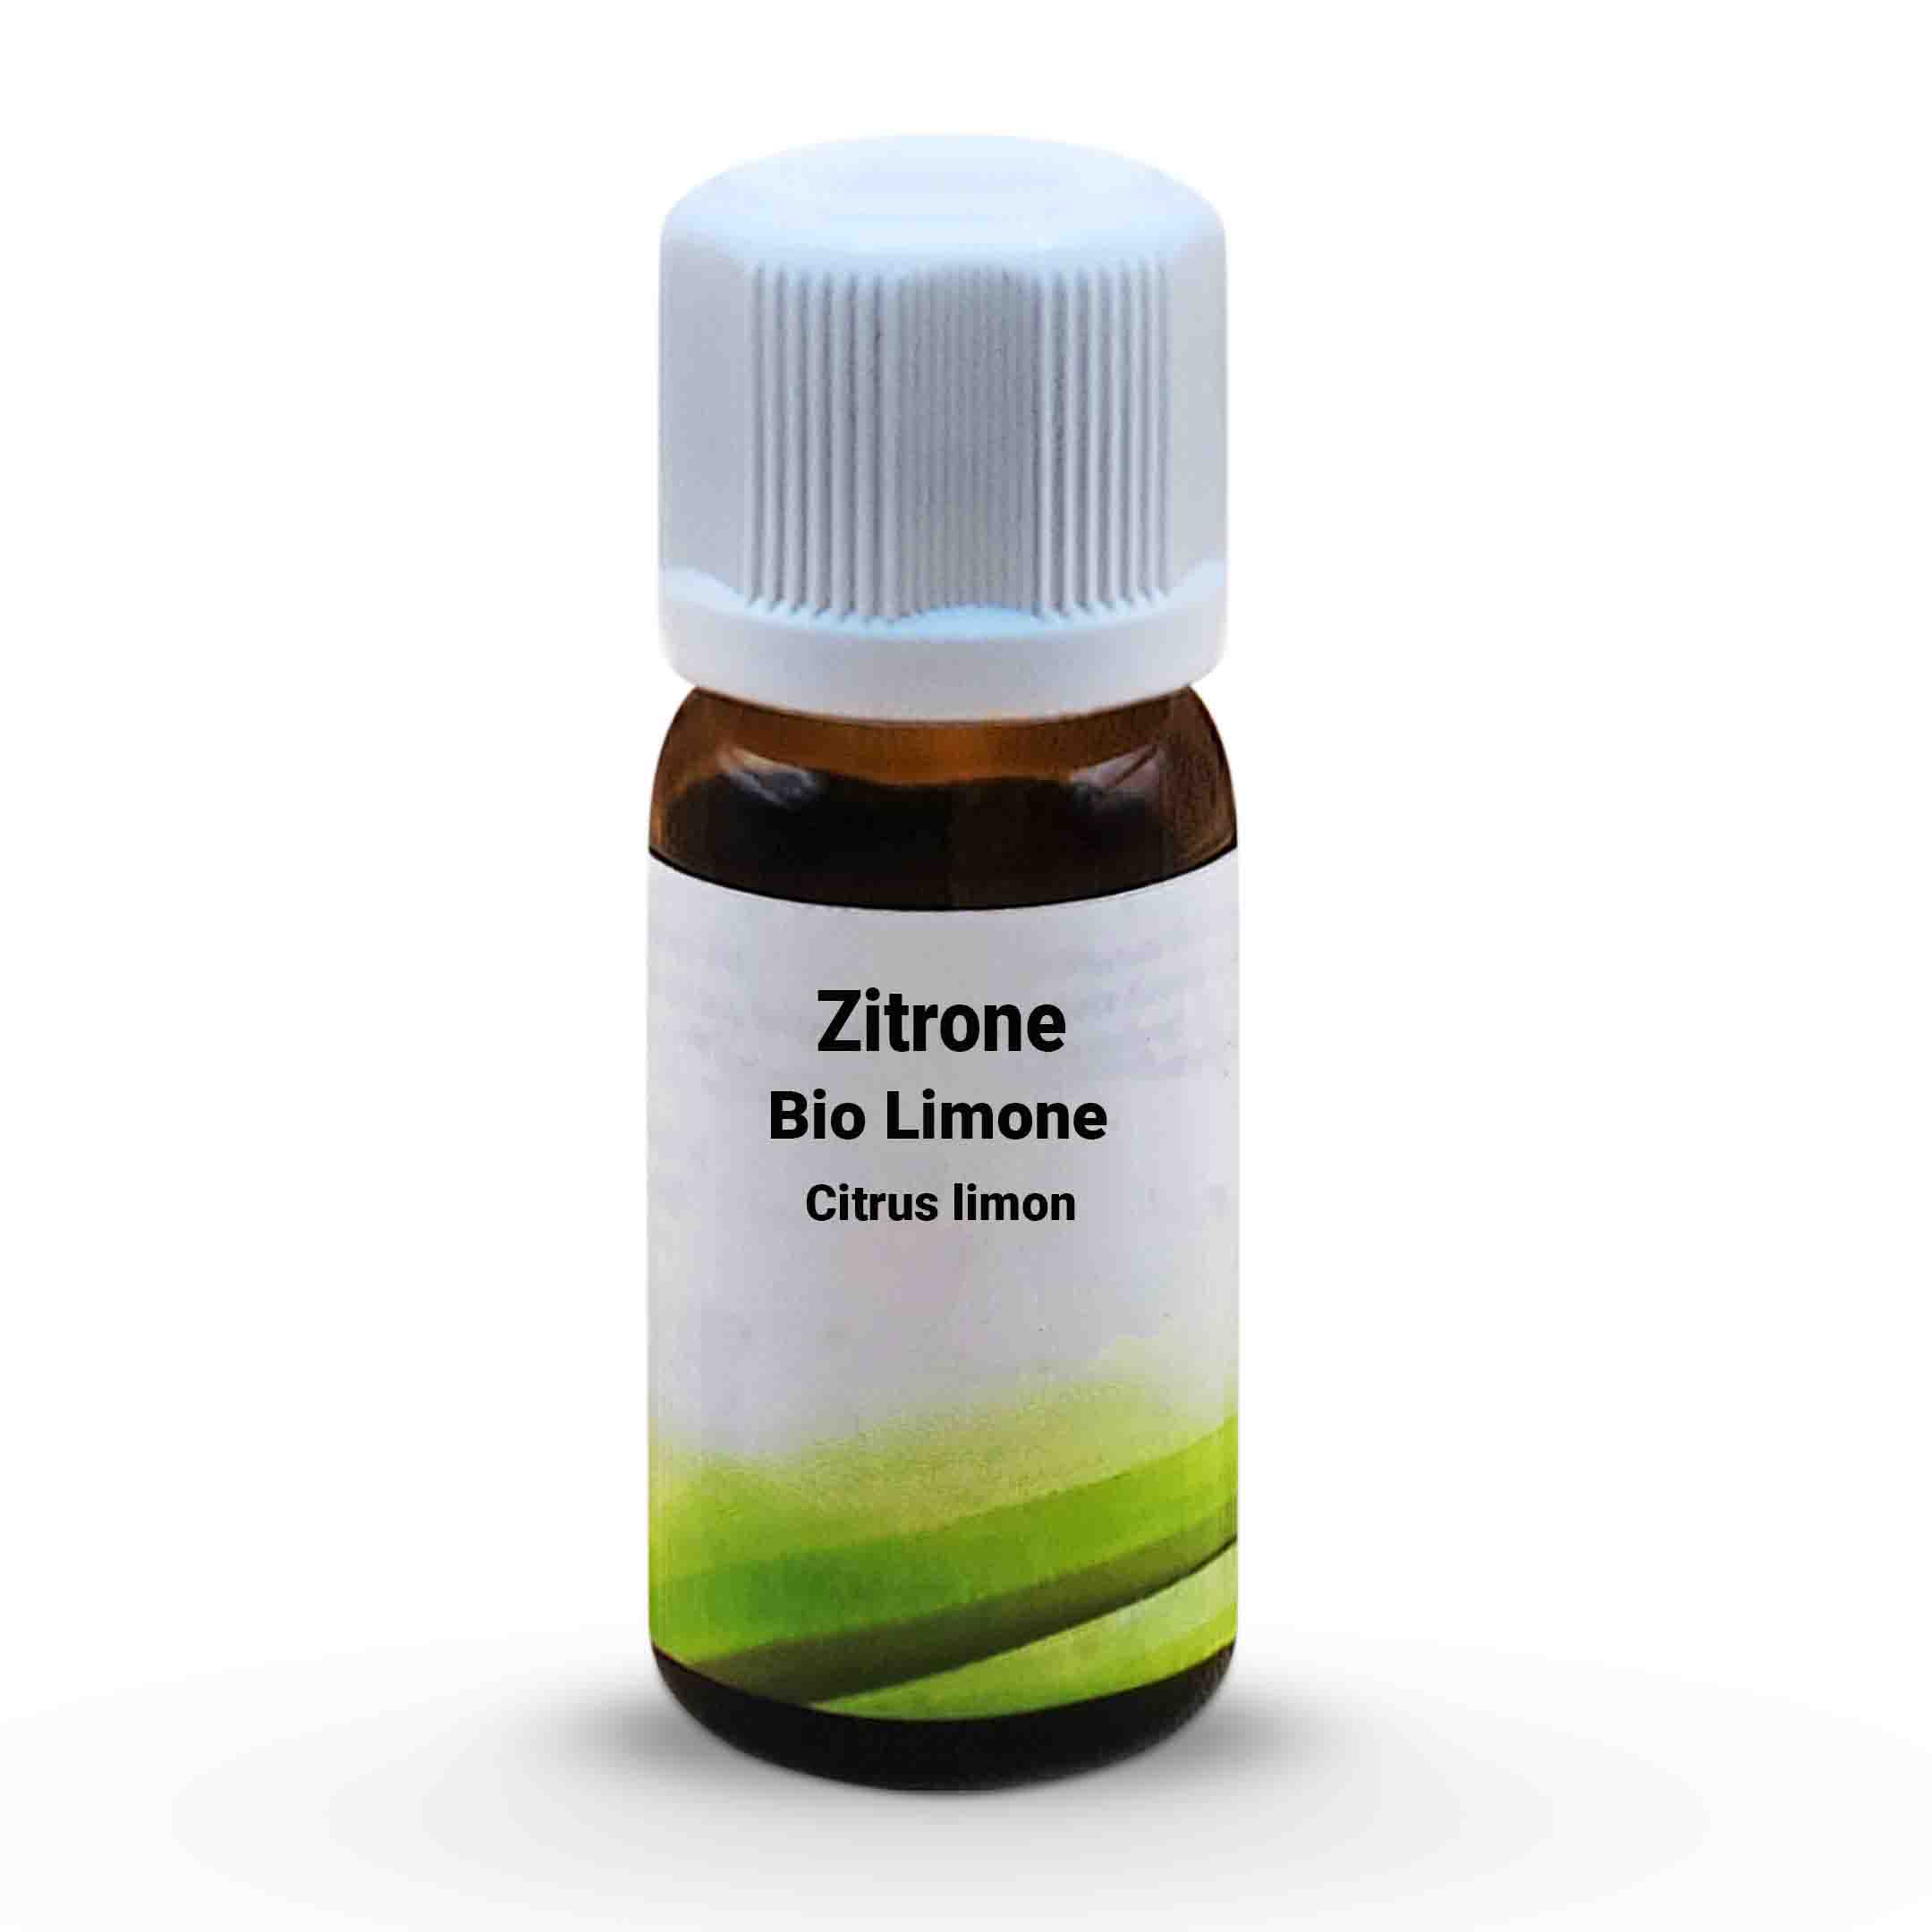 Zitrone Bio Limone - Citrus limon 10 ml